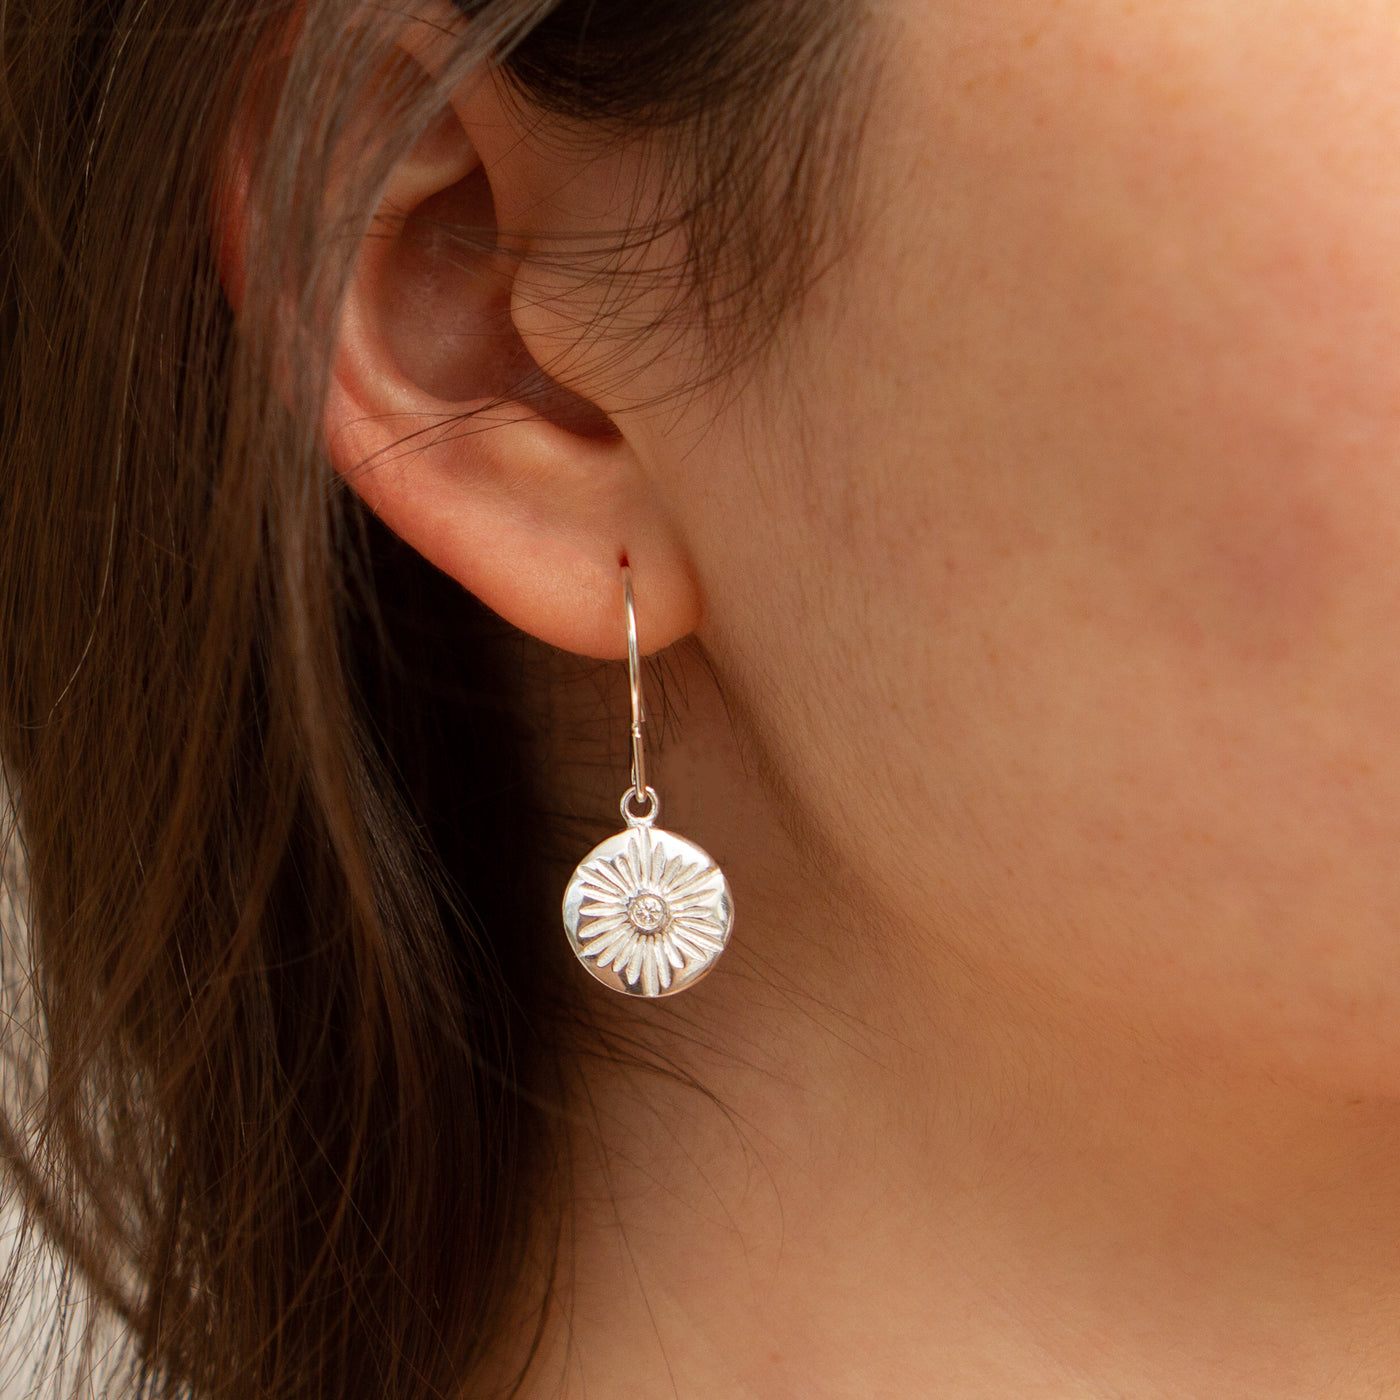 Large Lucia Silver Dangle Earrings modeled on an ear